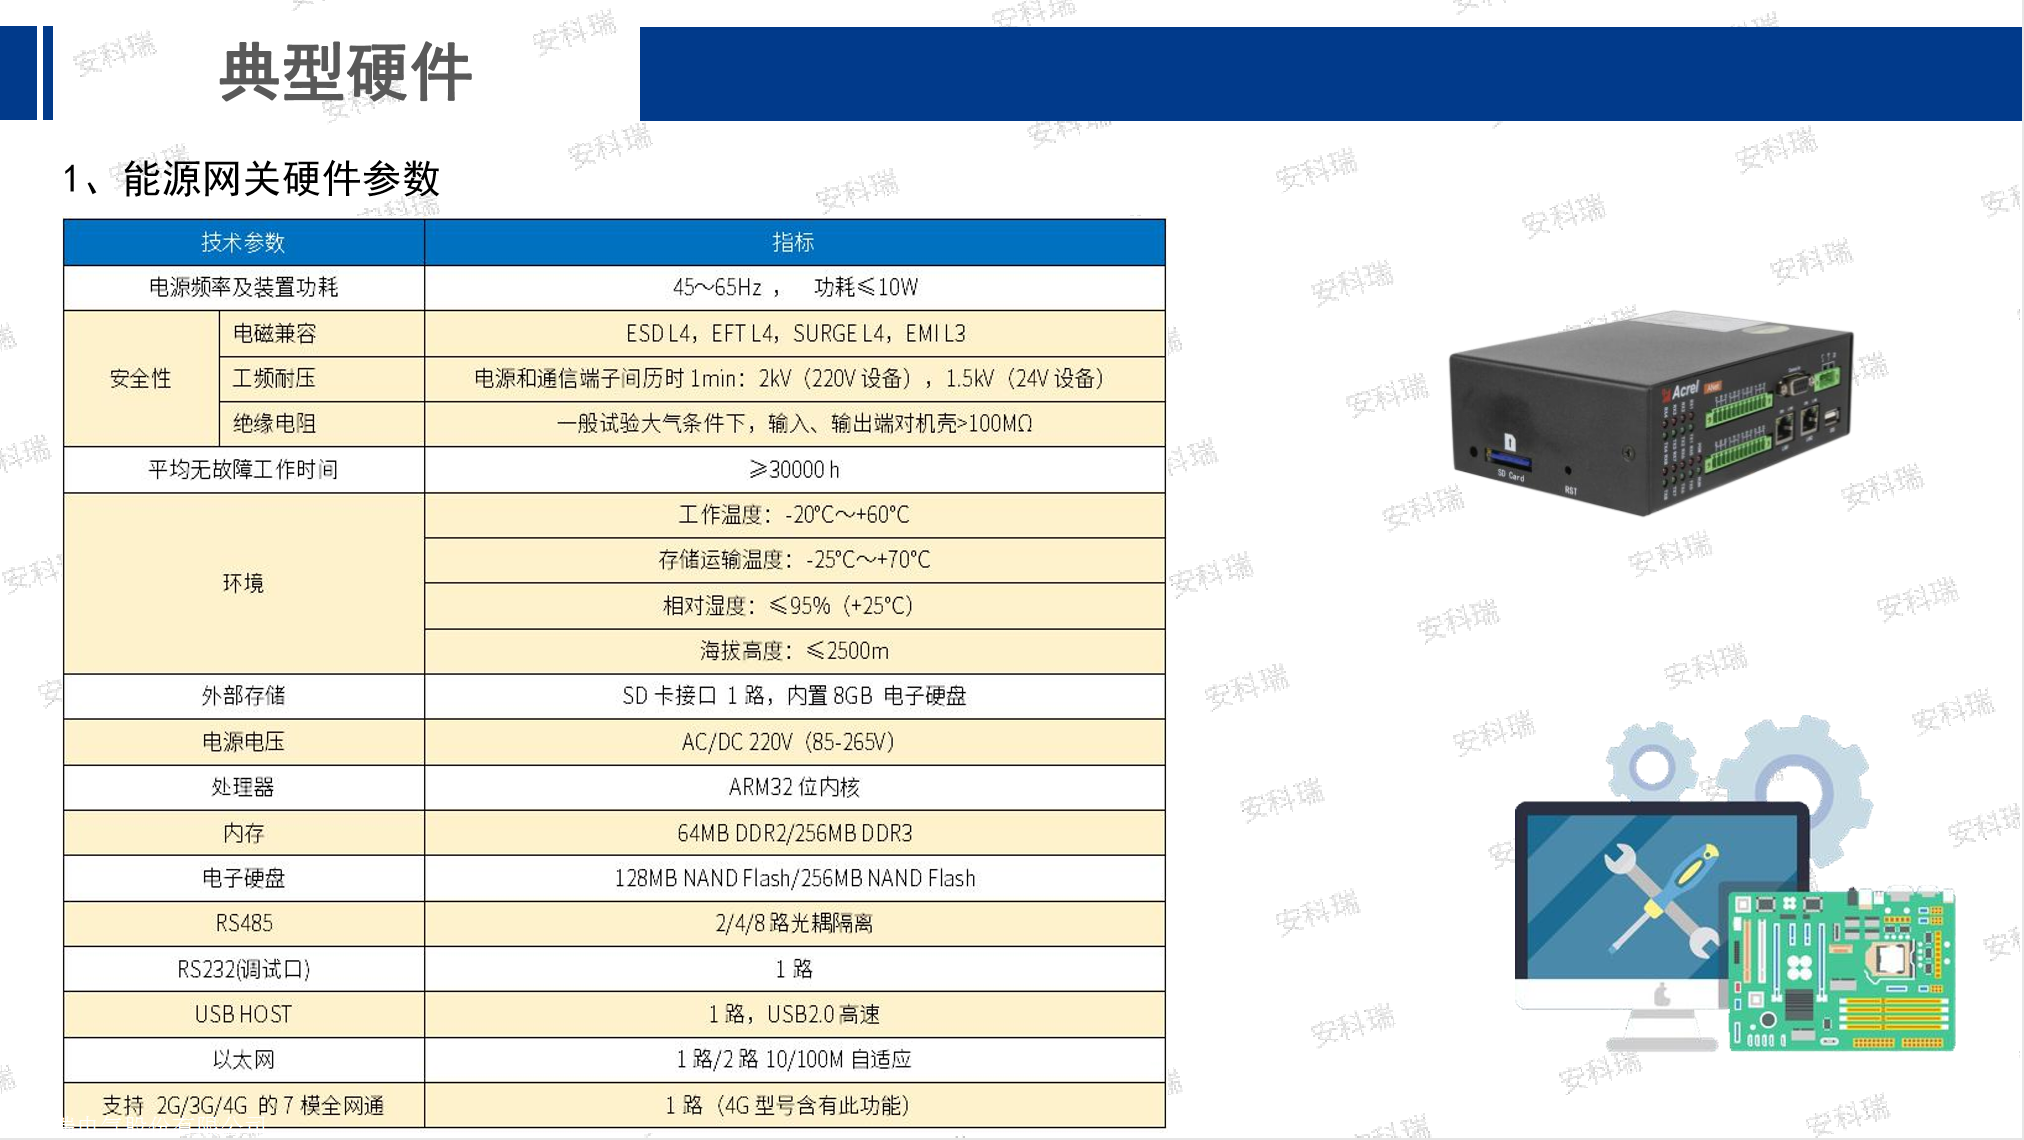 Acrel-5010江苏省重点企业用电监控终端